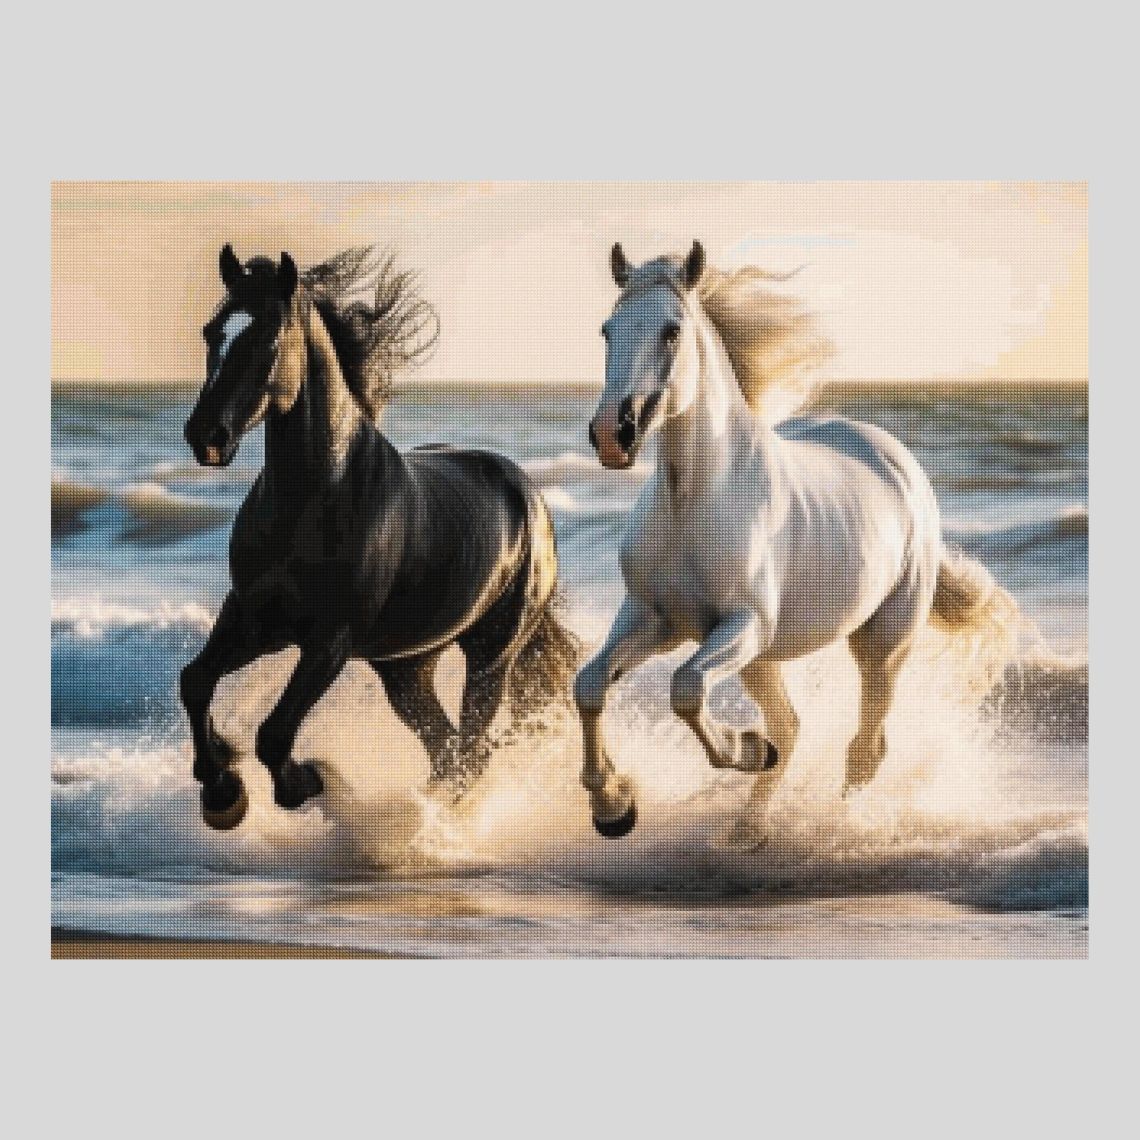 Running Black Horse – All Diamond Painting